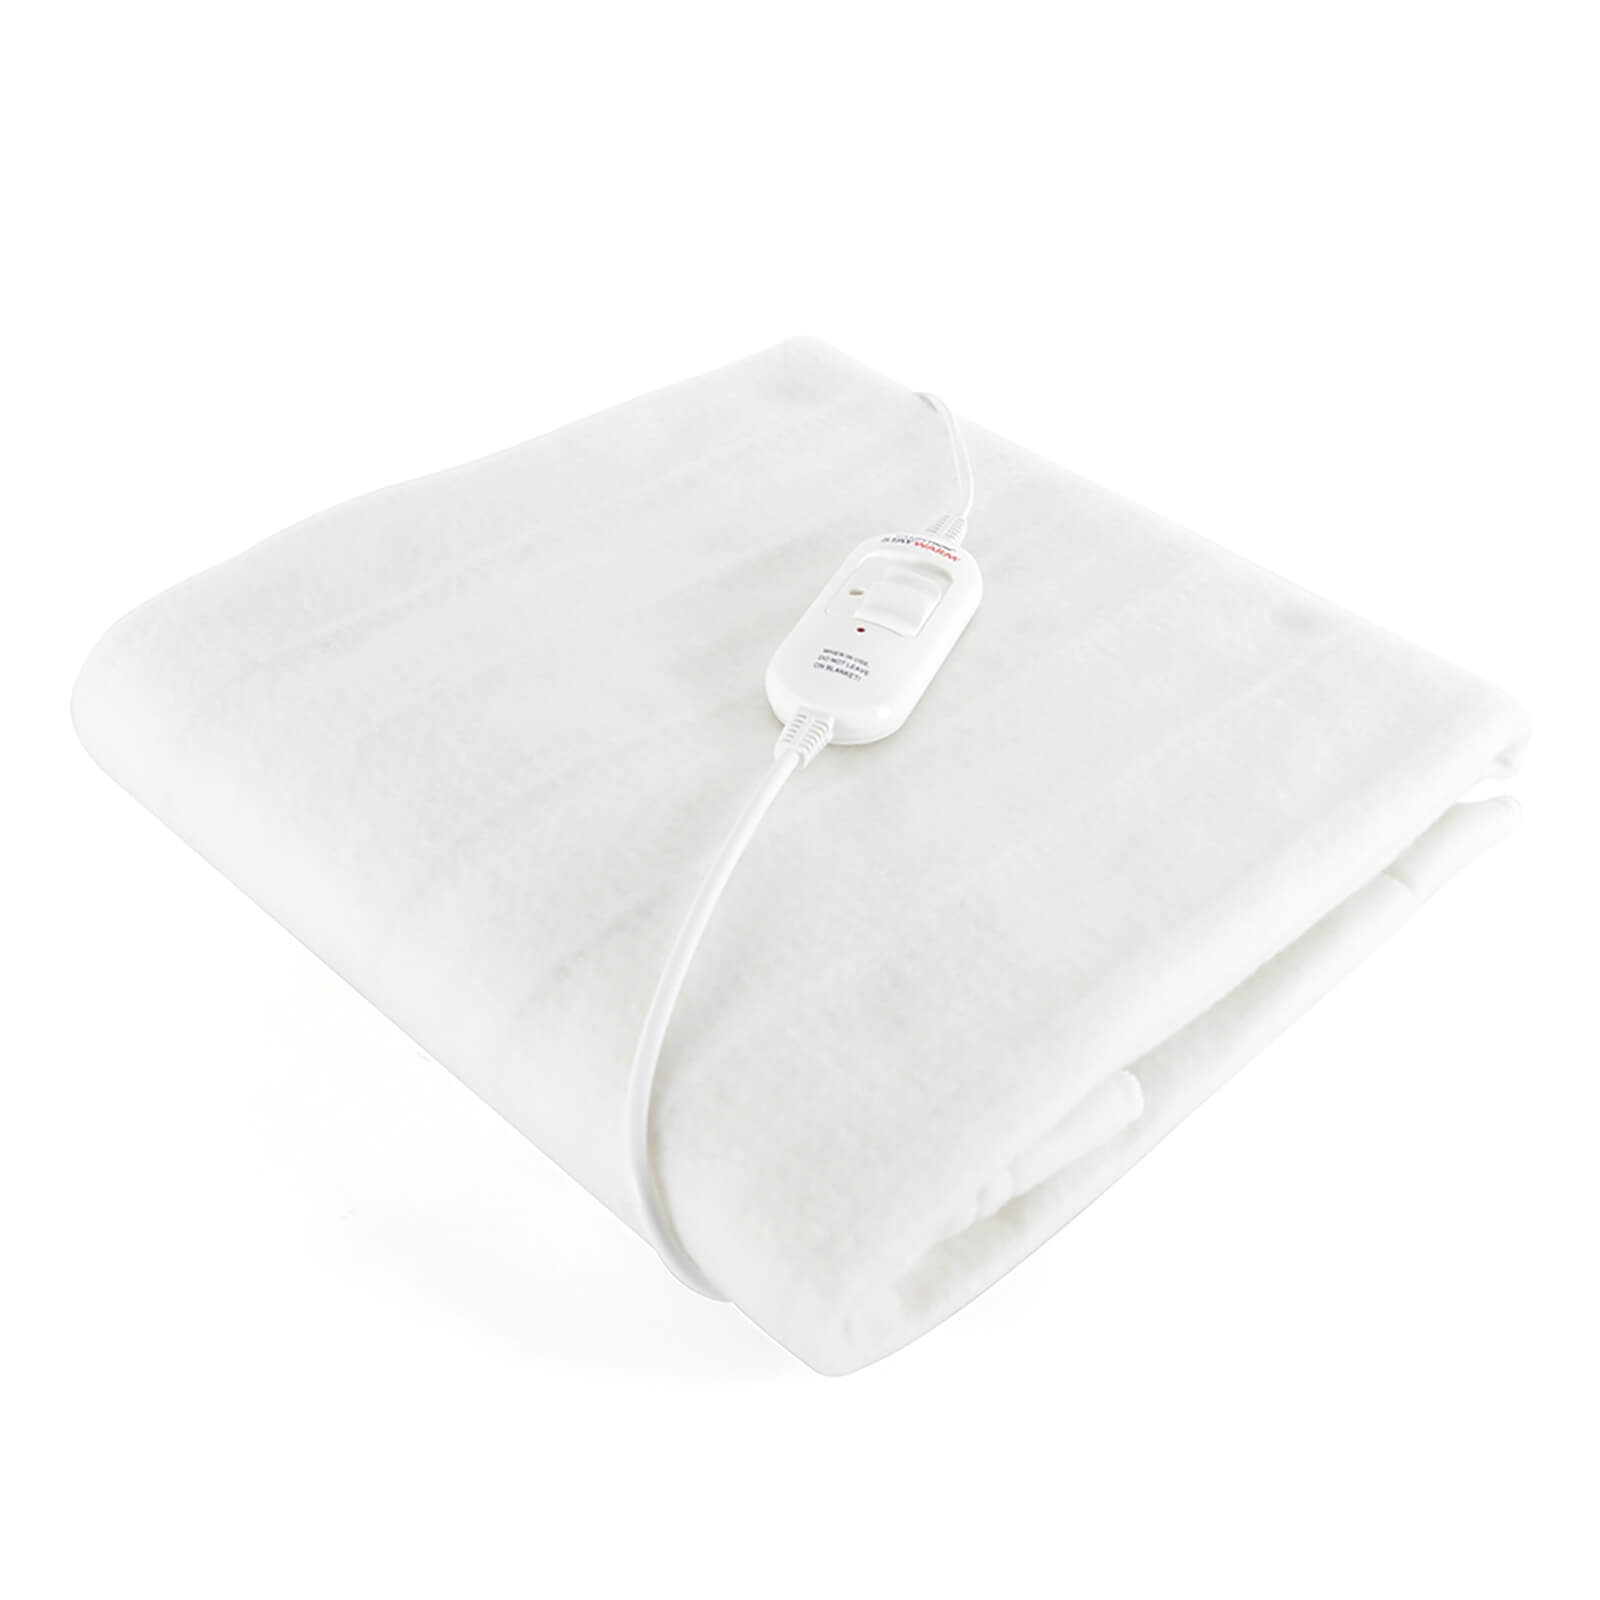 Photo of Staywarm Luxury Electric Blanket - King